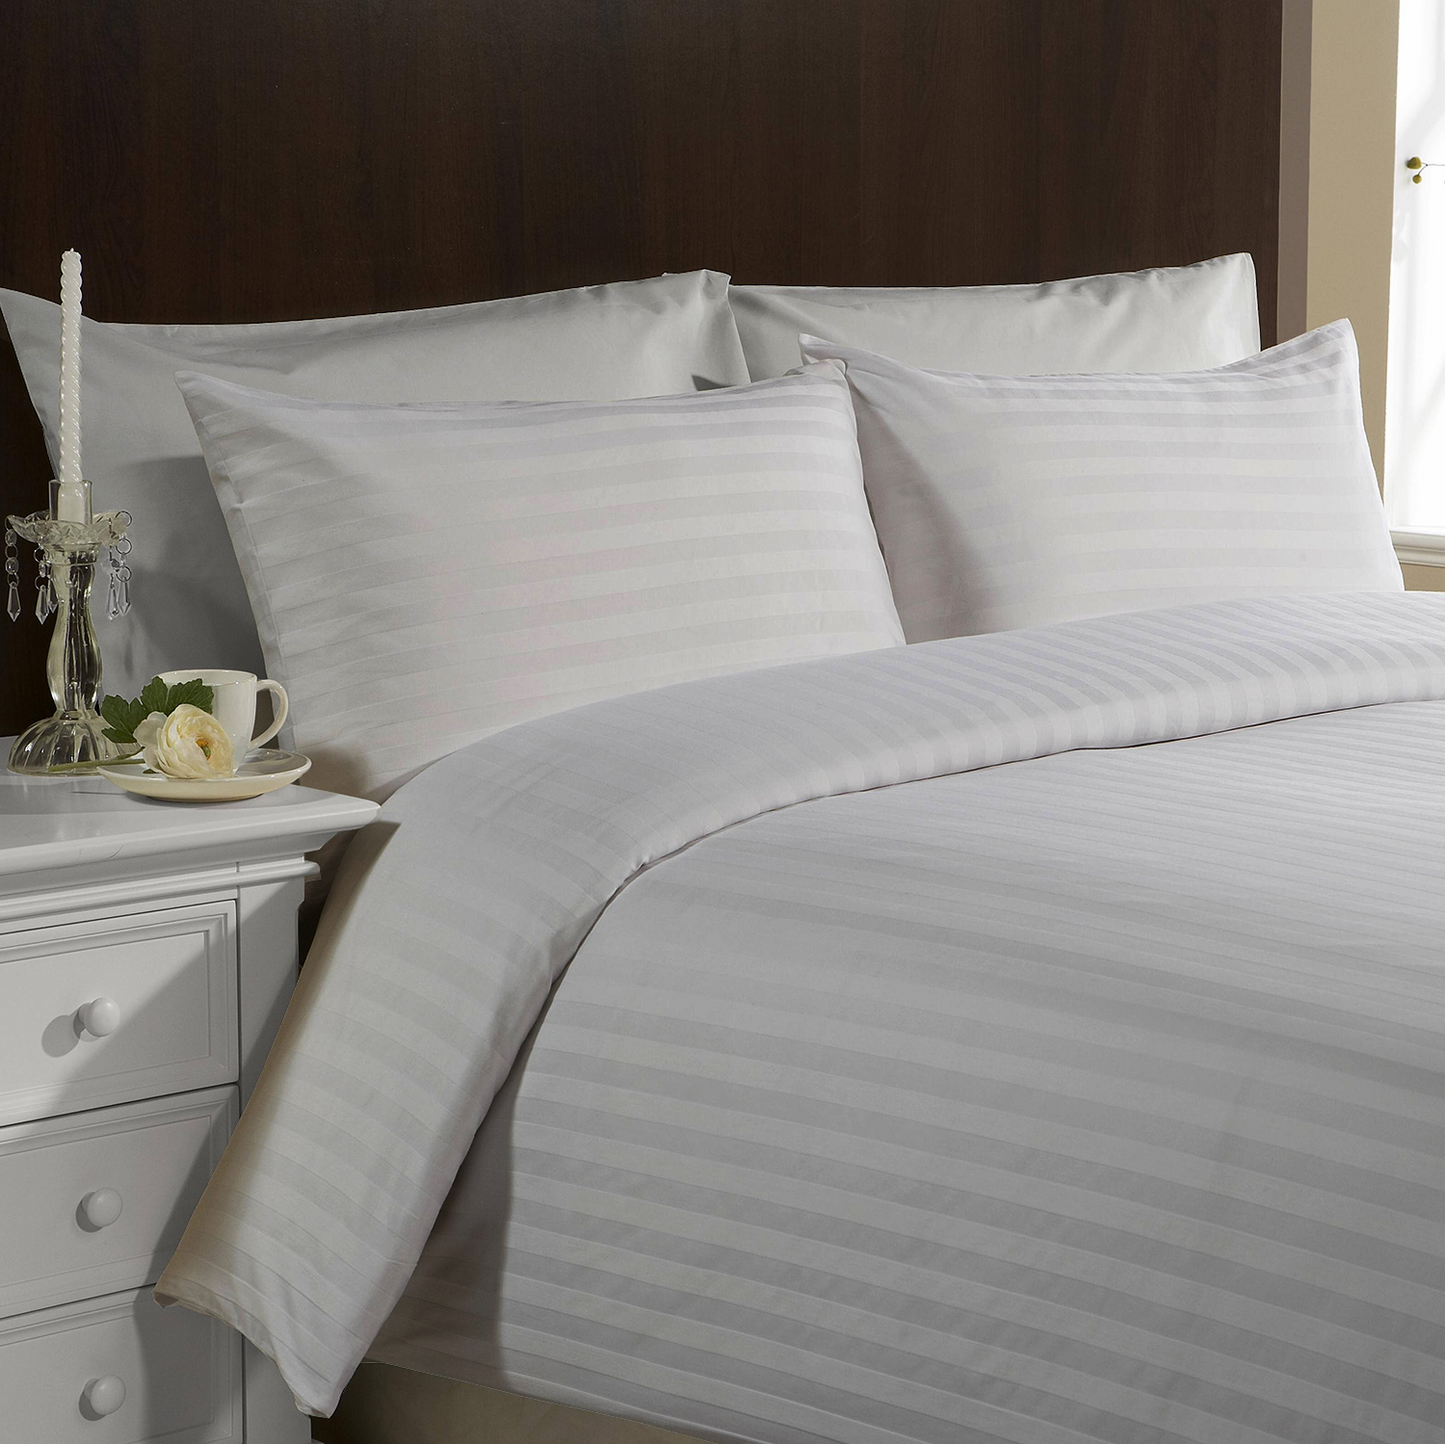 Black & White Hotel Stripes Beddings